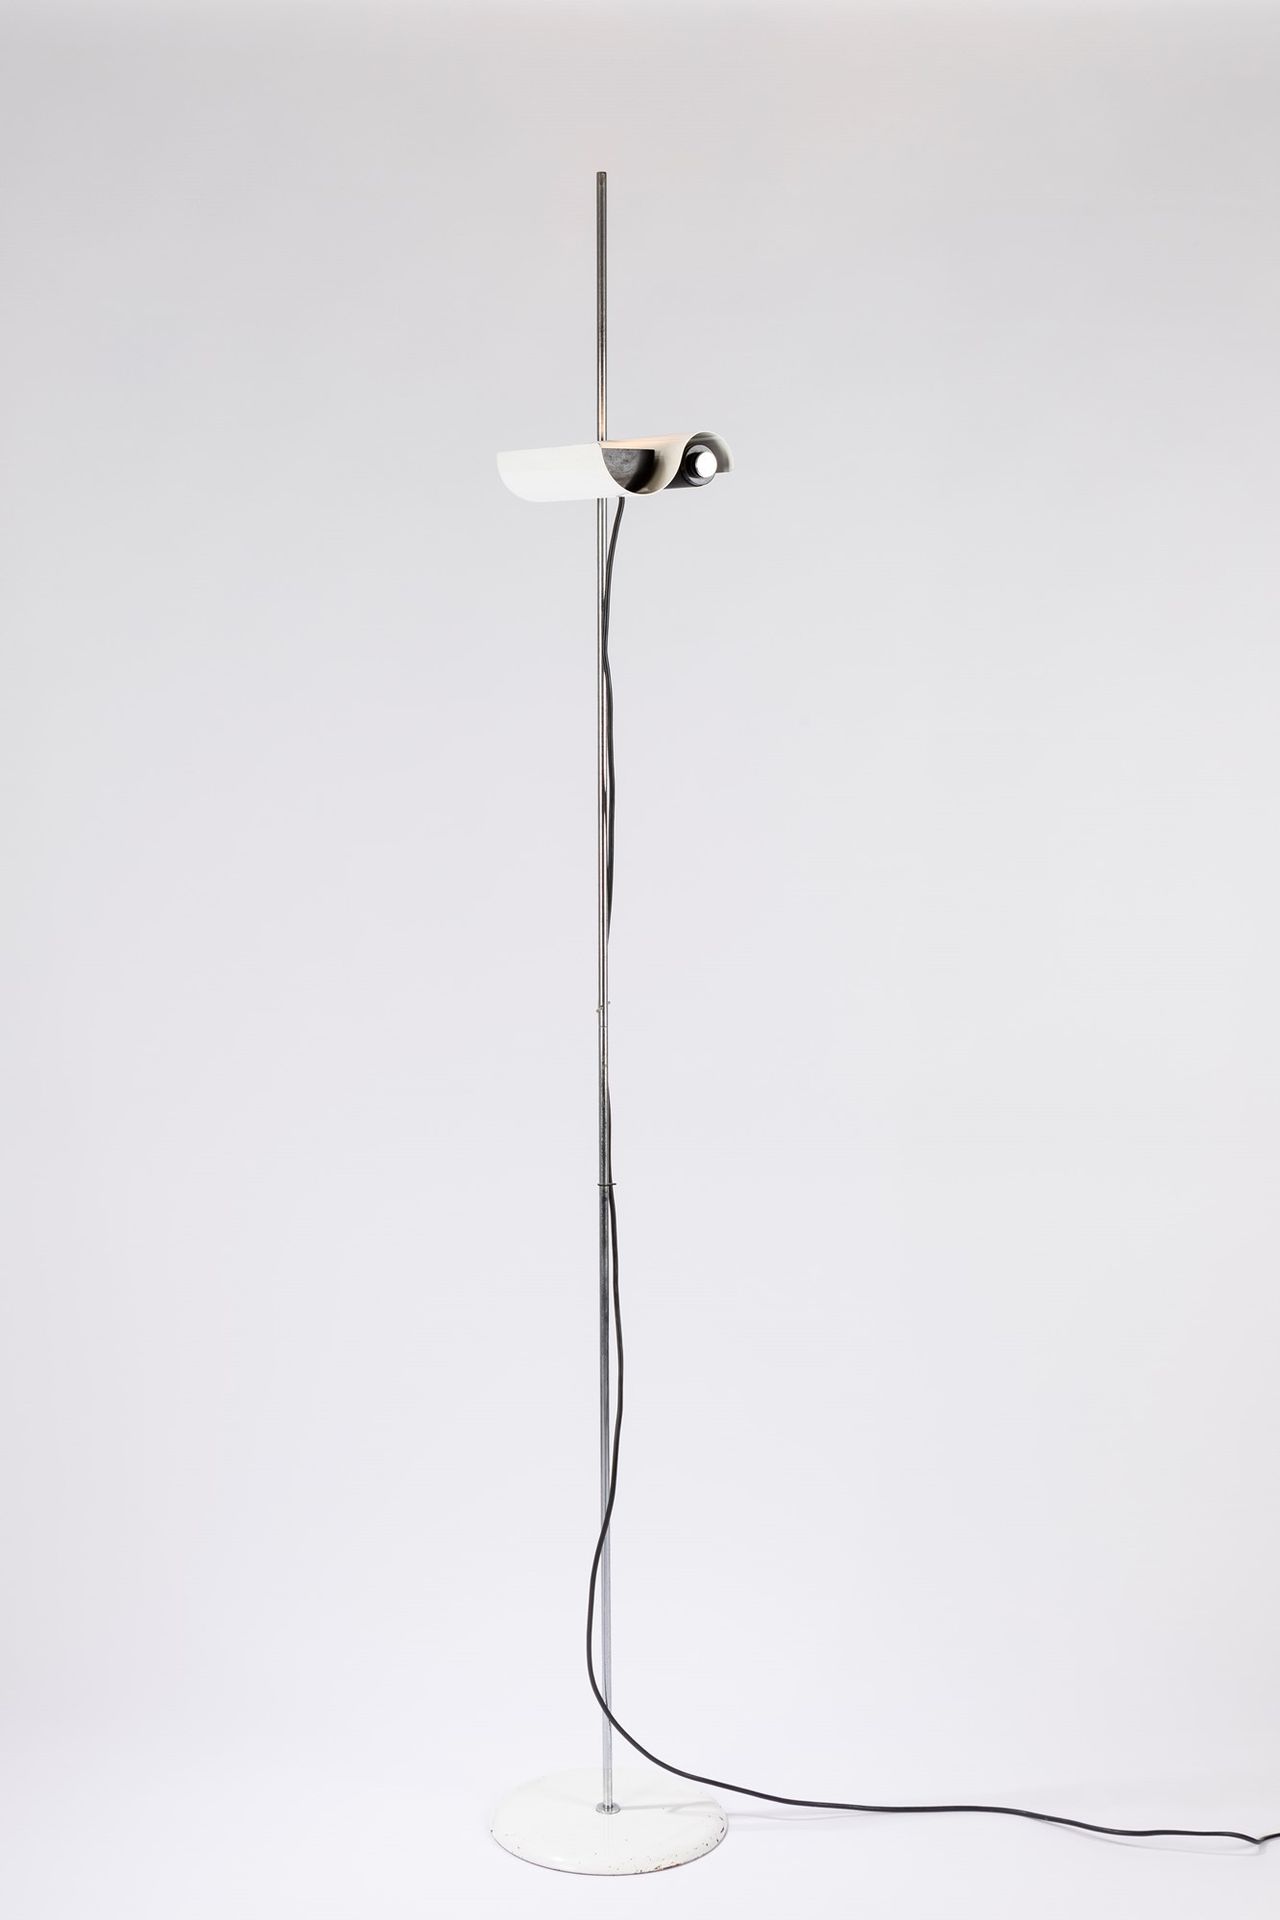 VICO MAGISTRETTI DIM 33, 1975

H 200 x diam 30 cm
floor lamp with dimmer giving &hellip;